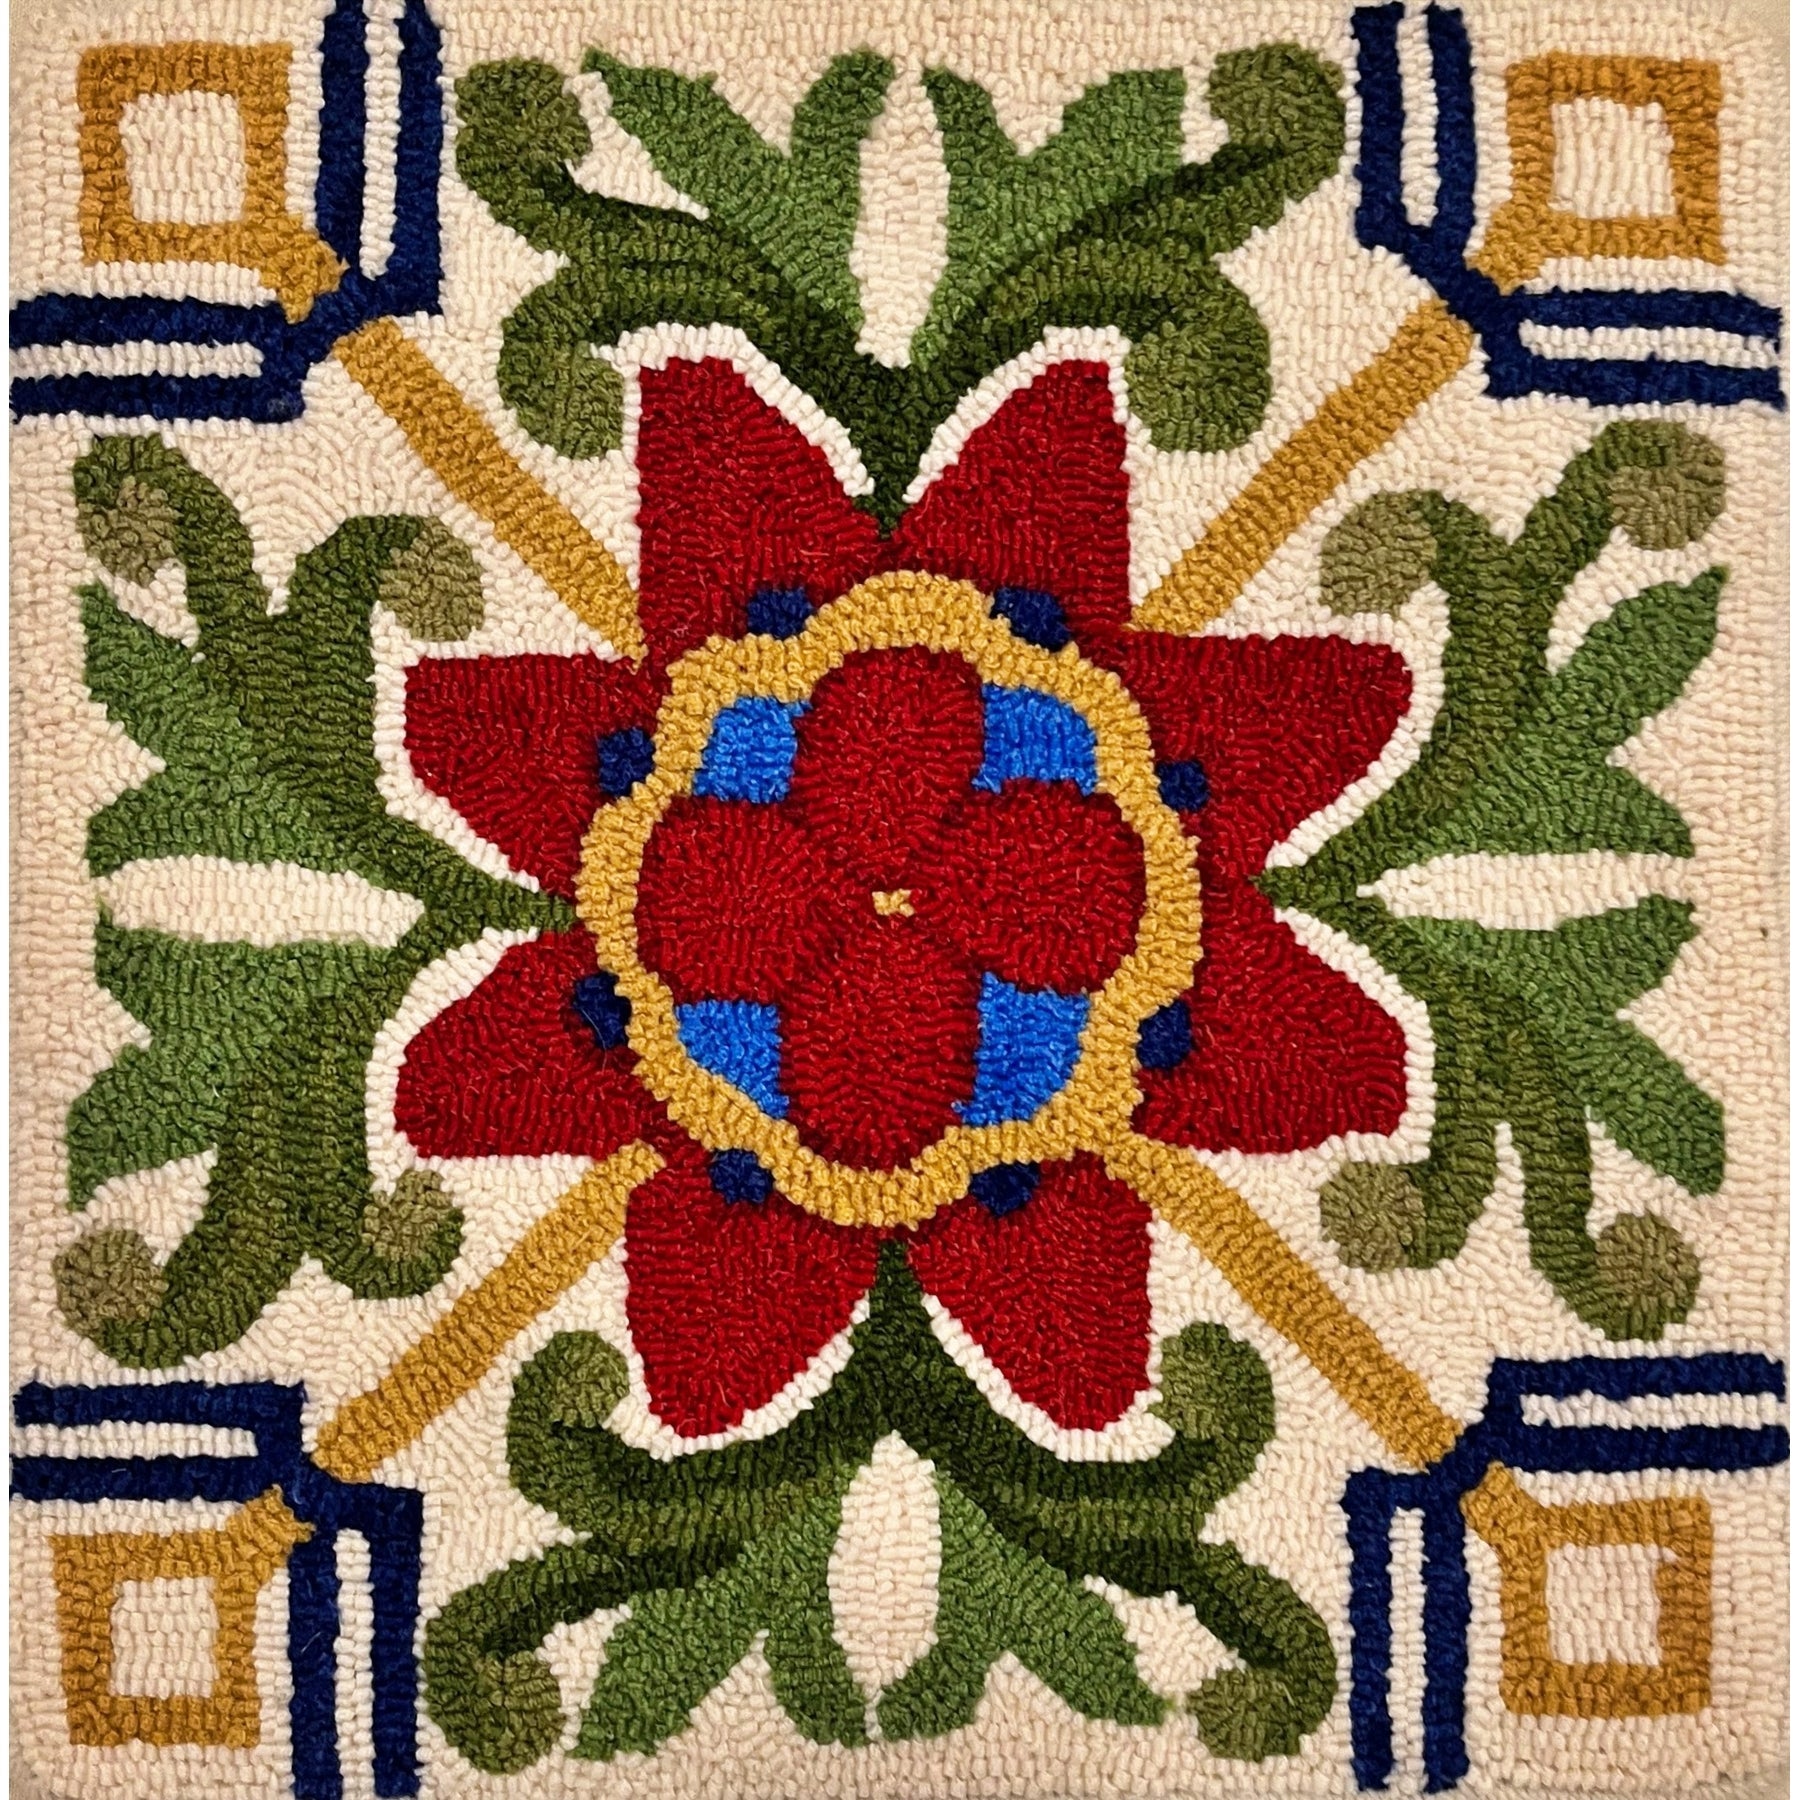 St. Augustine, rug hooked by Kathy Kovaric